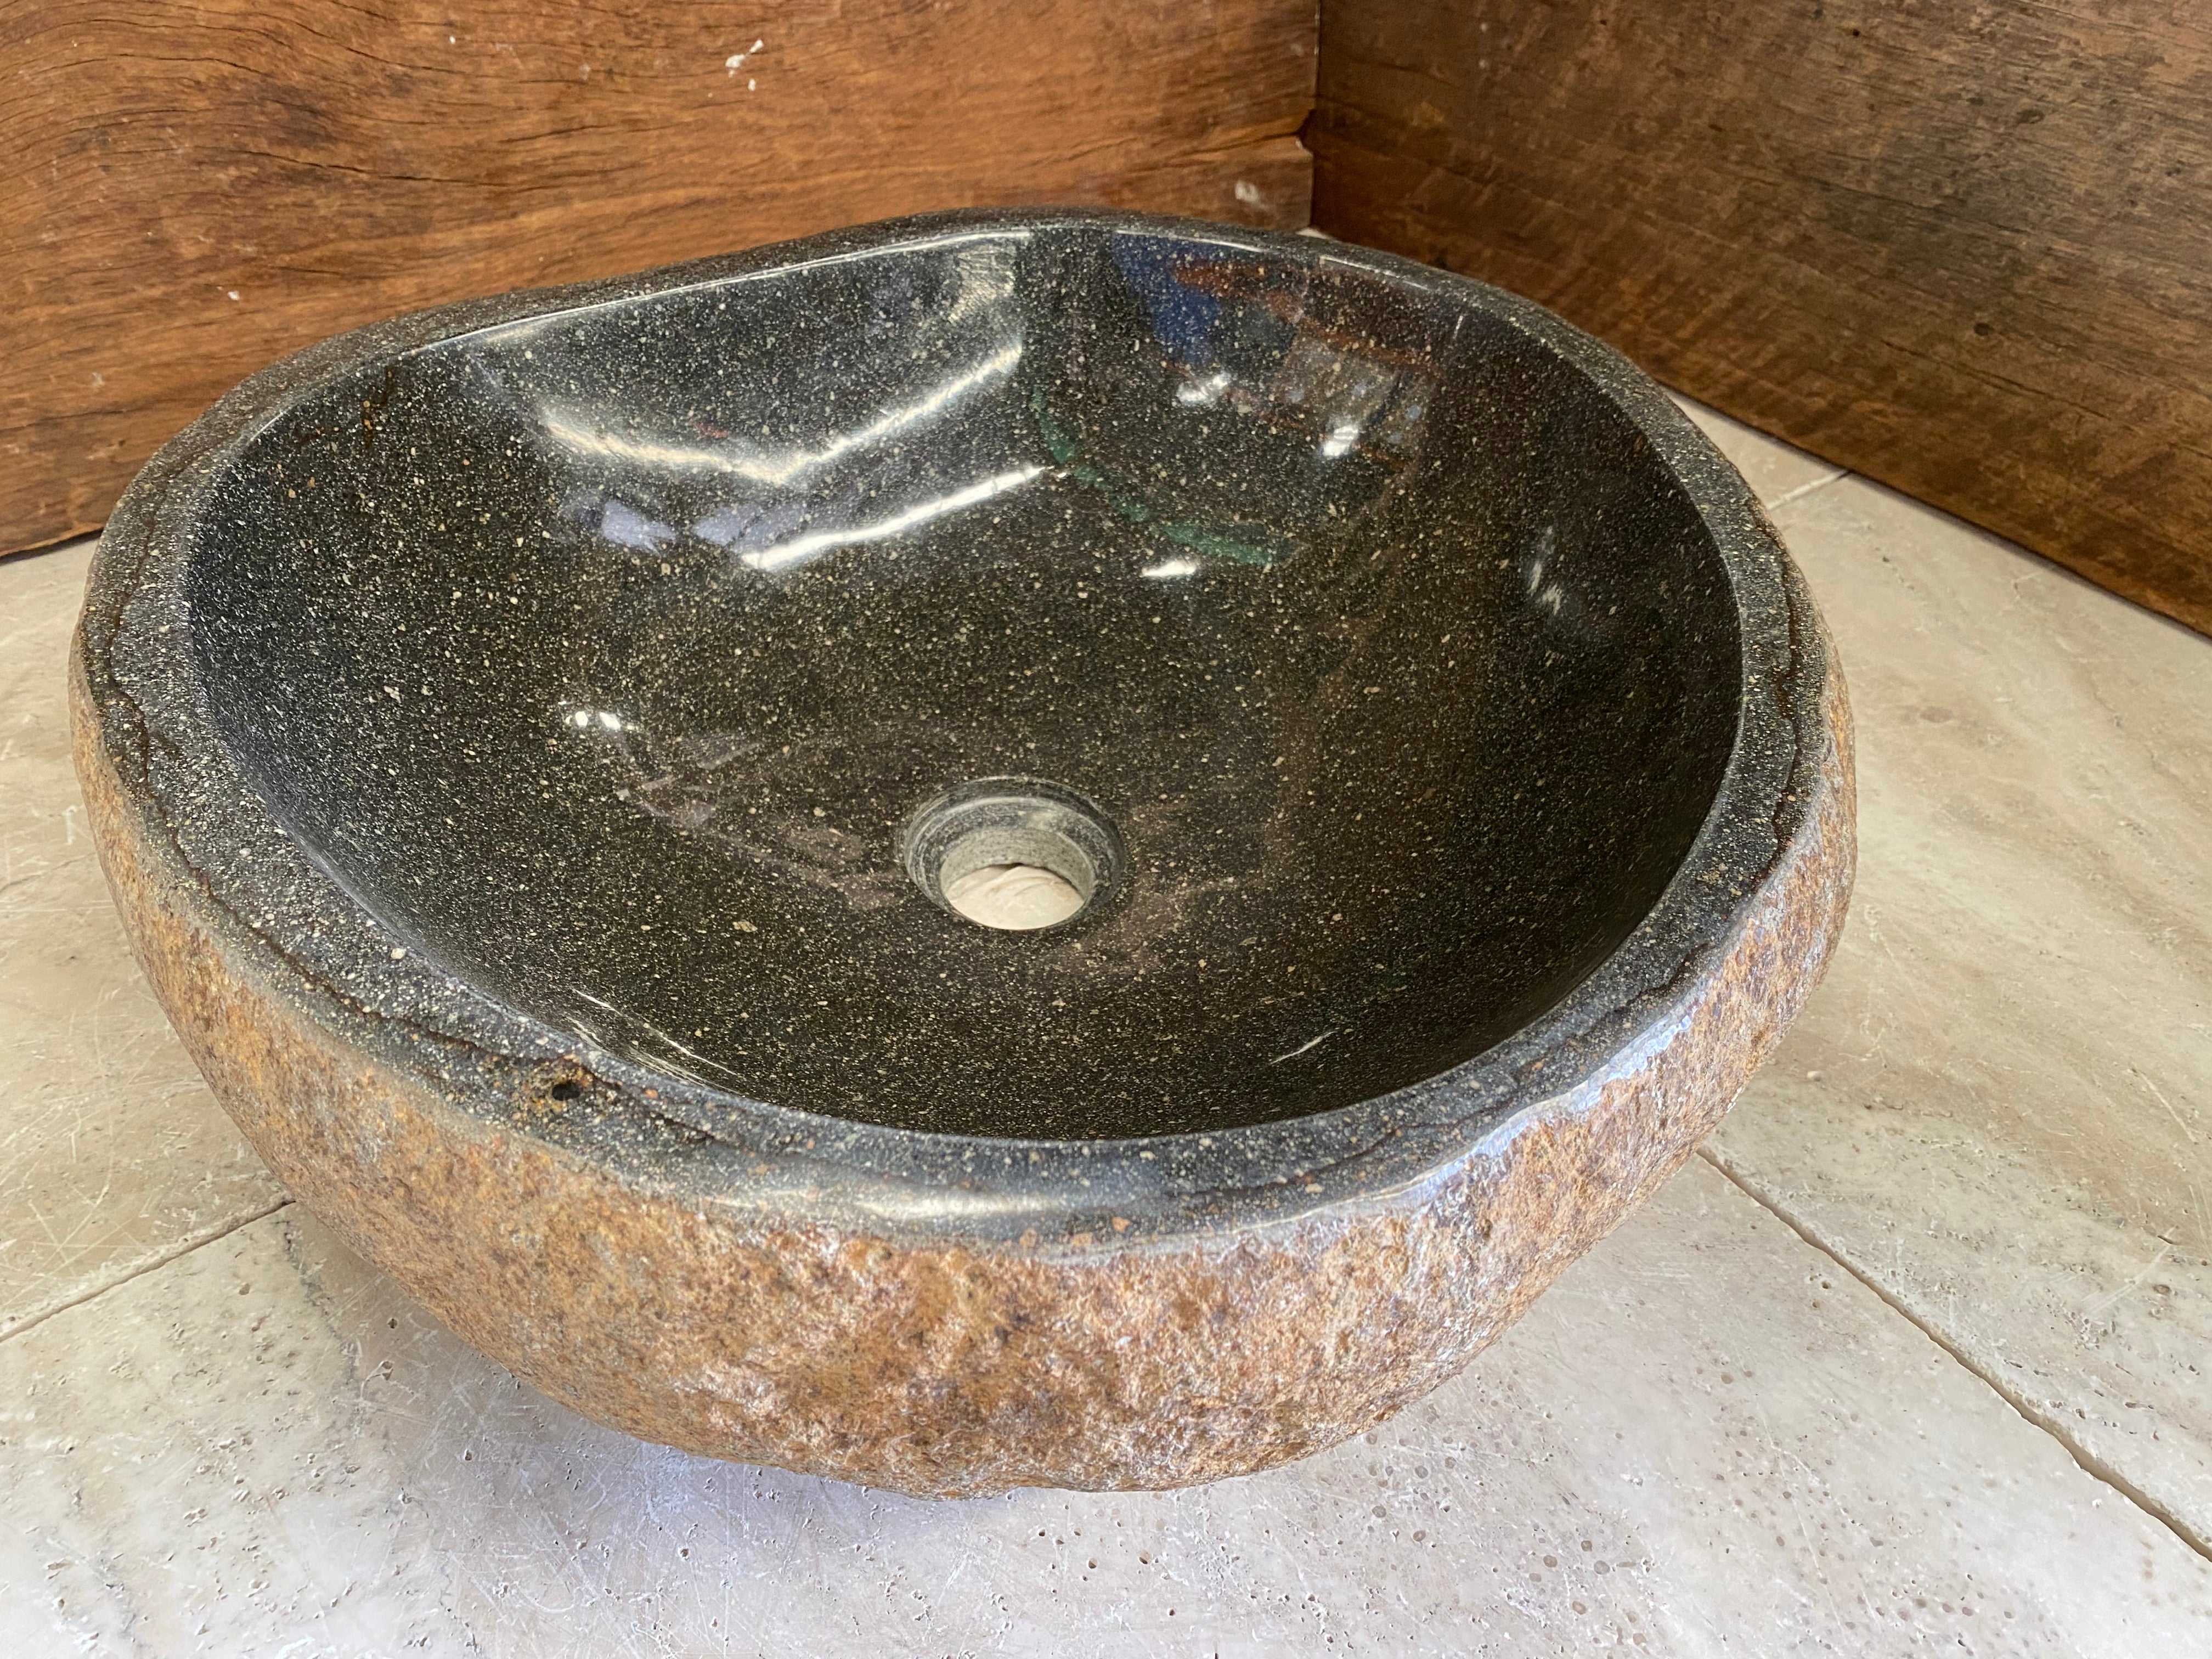 Handmade Natural Oval River Stone Bathroom Basin - RM2306034